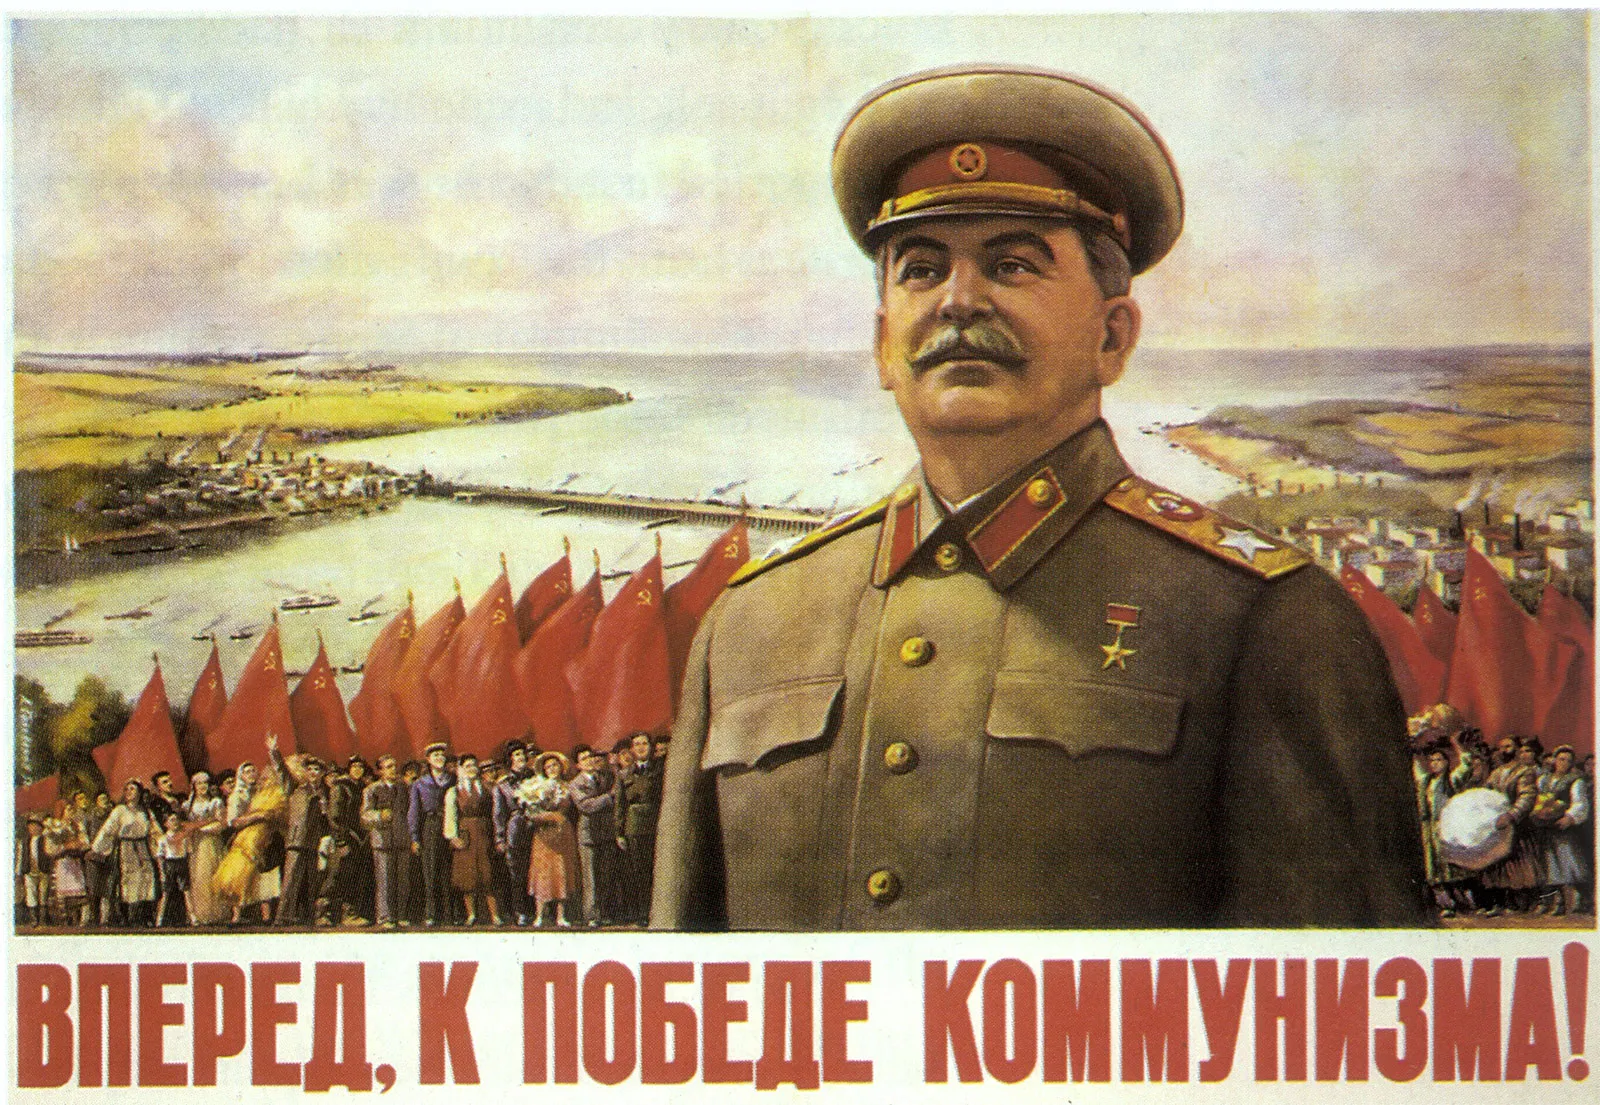 Poster of Joseph Stalin